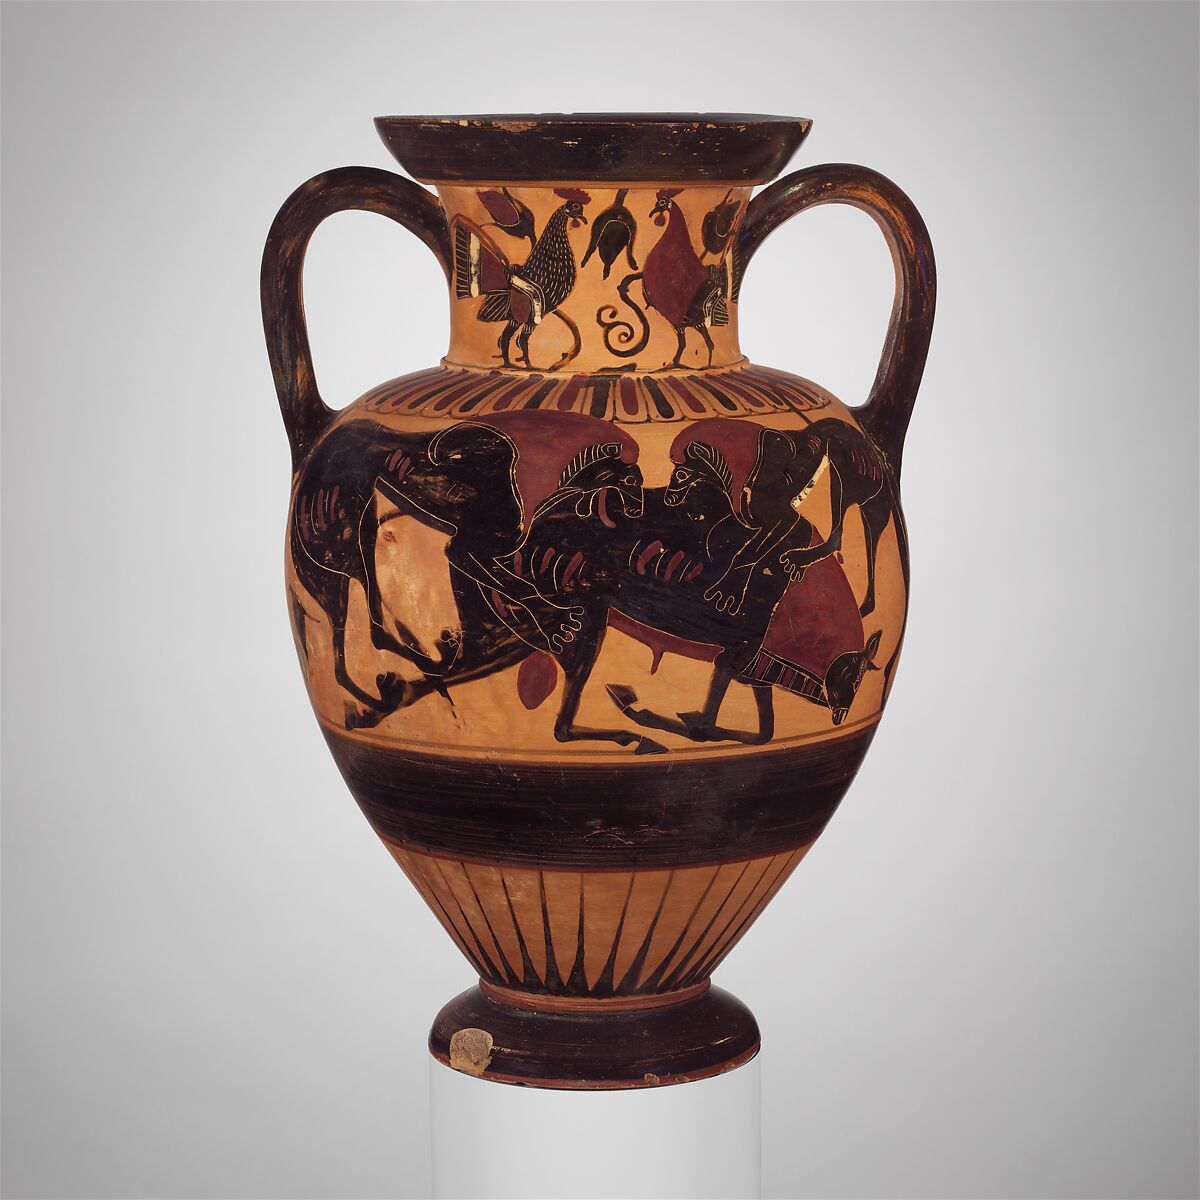 Terracotta neck-amphora (jar), Attributed to the Polyphemos Group, Terracotta, Greek, Chalcidian 